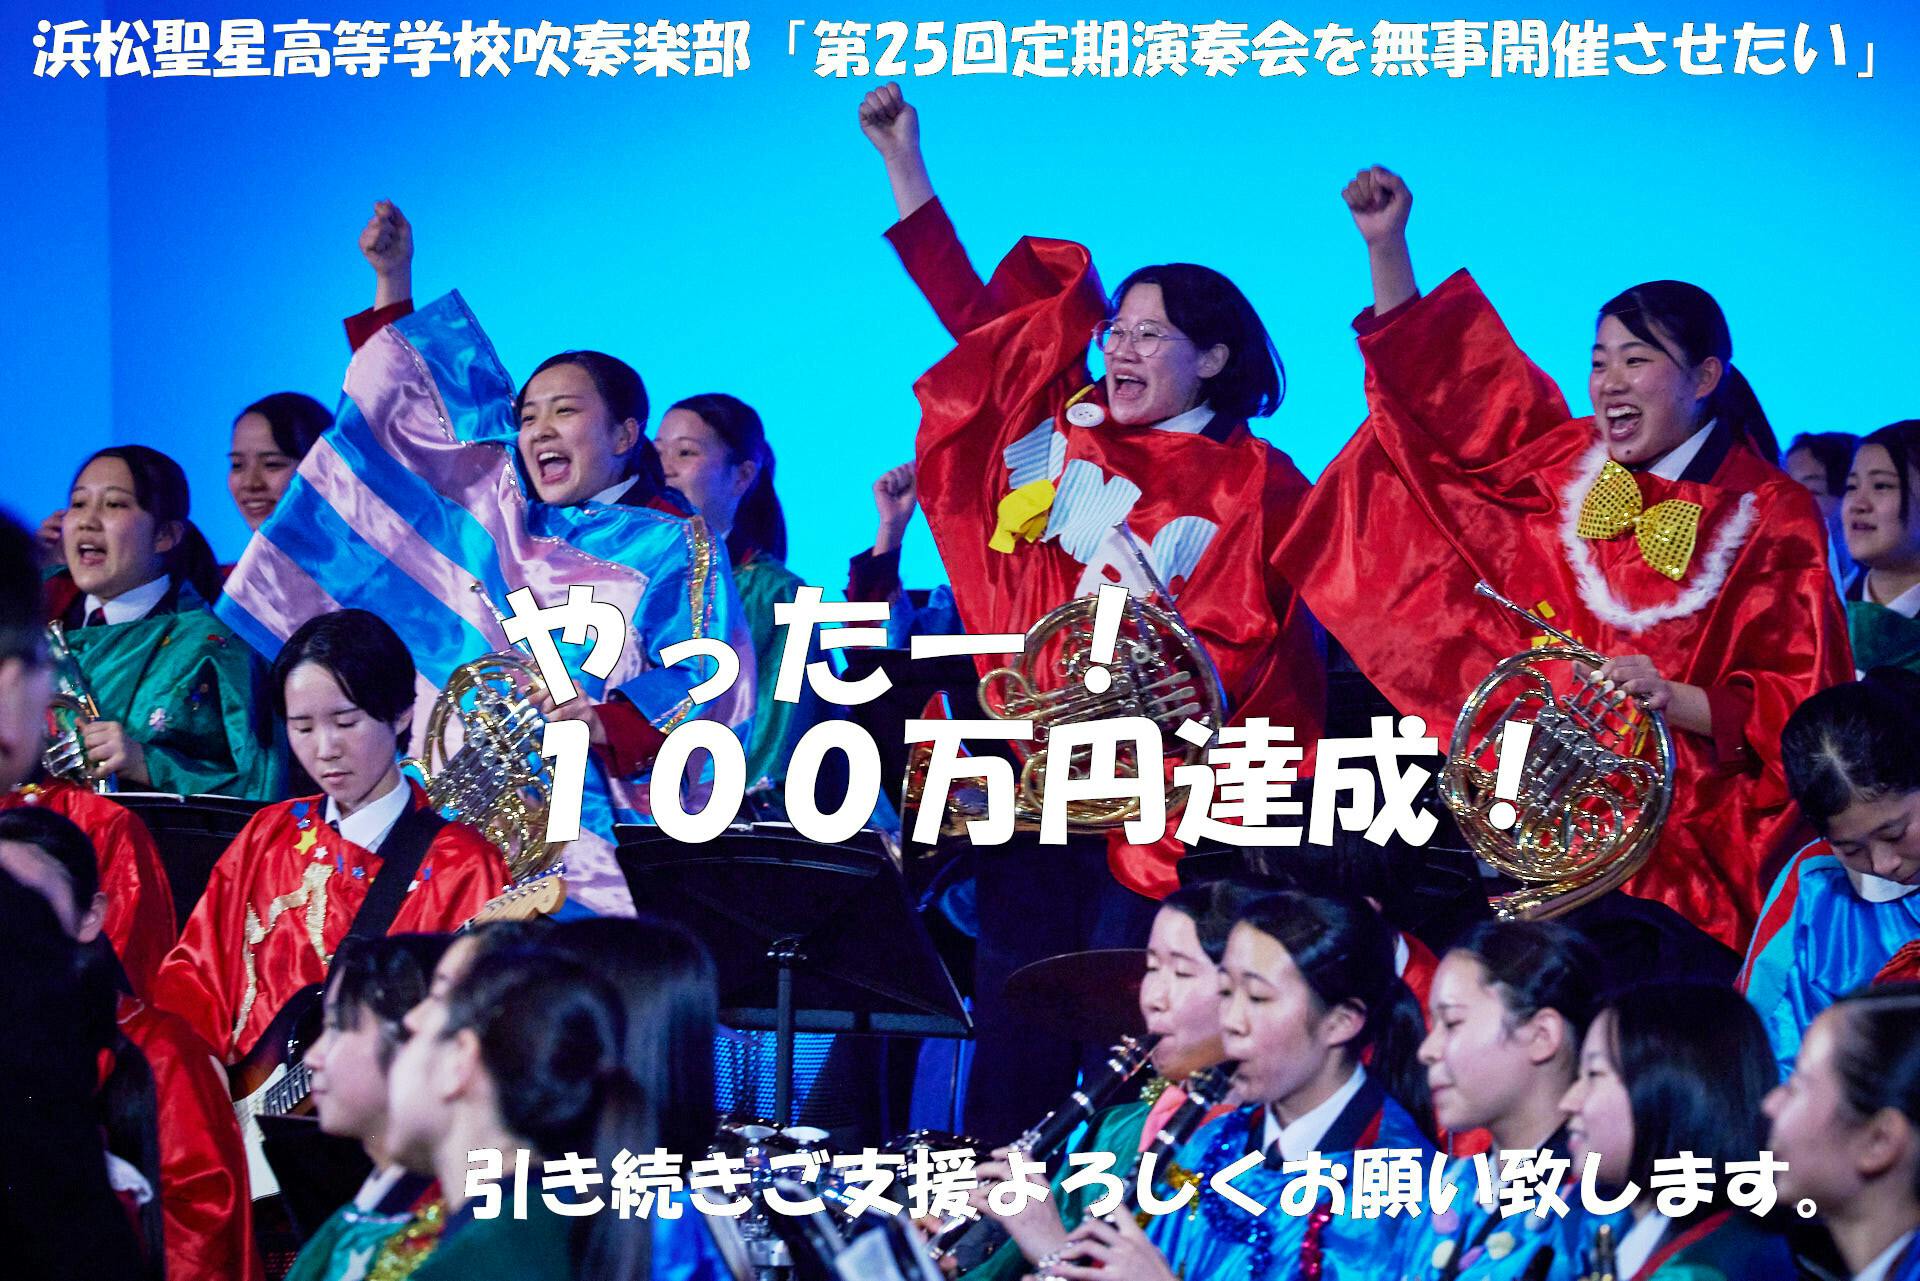 浜松聖星高等学校吹奏楽部の記念すべき25回目の定期演奏会を無事開催